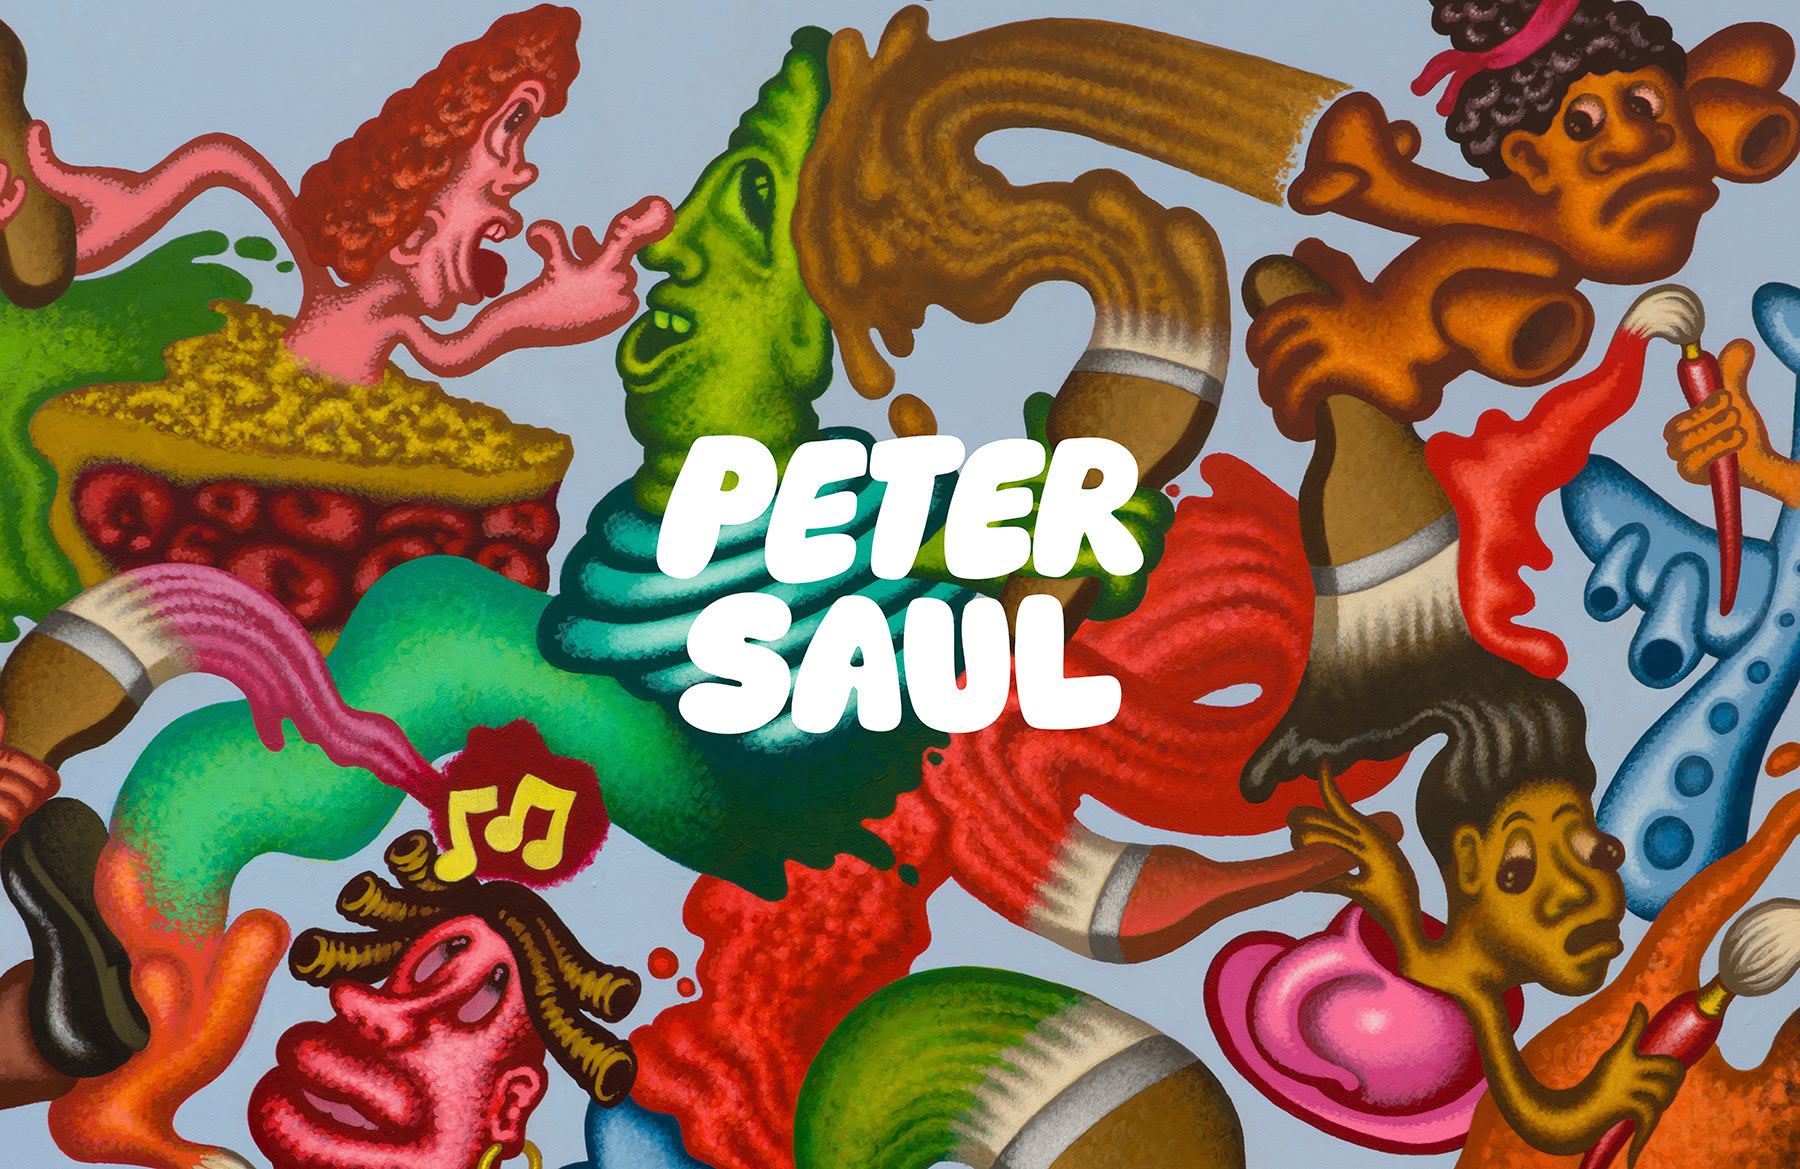 Peter Saul
Opening Thursday, September 7th
39 Great Jones Street

Image Link